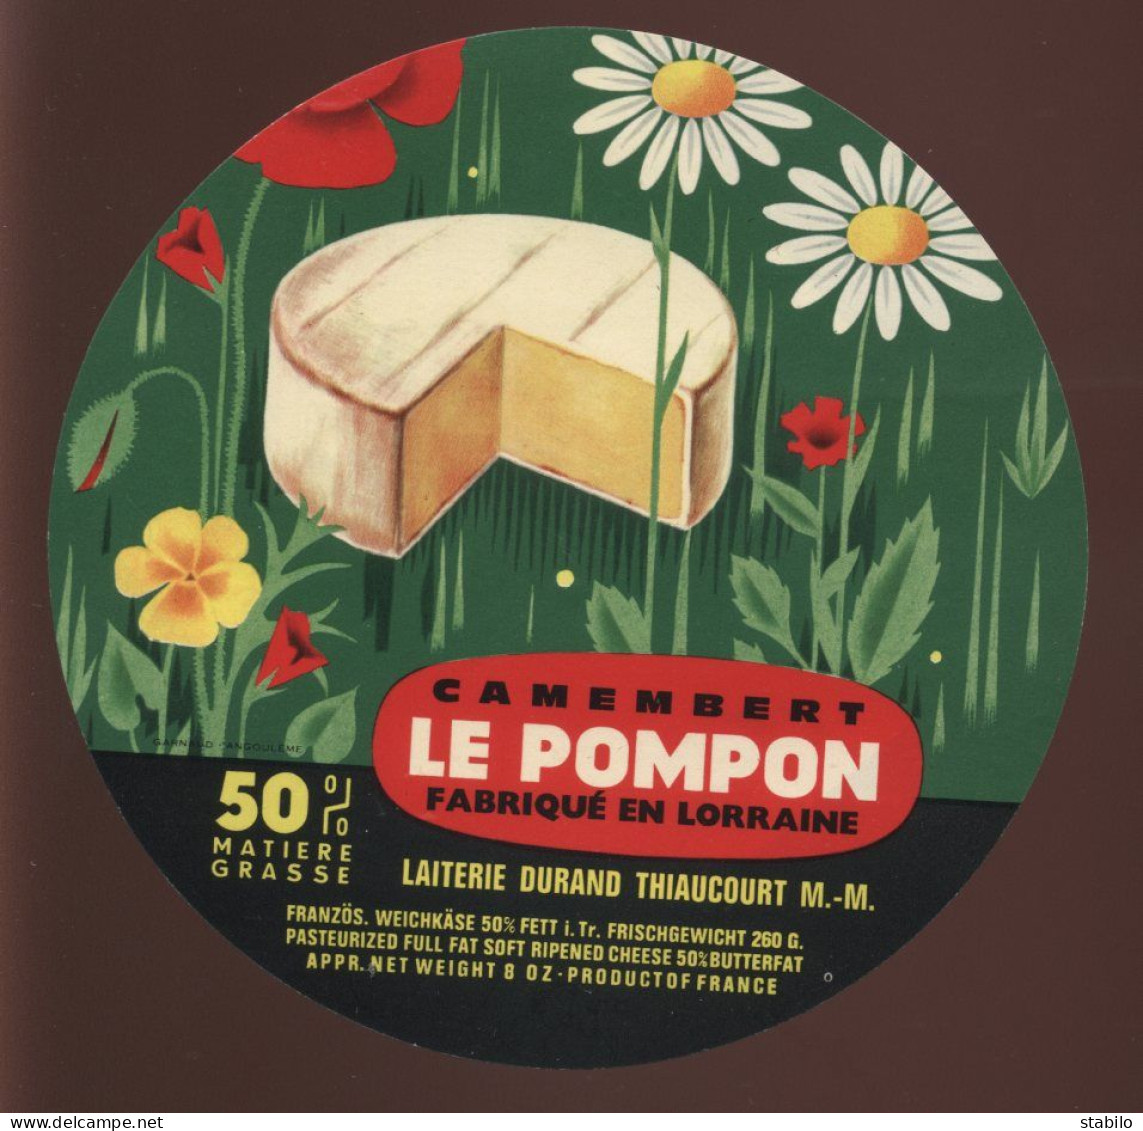 ETIQUETTE DE FROMAGE - CAMEMBERT LE POMPON - FROMAGERIE DURAND, THIAUCOURT (MEURTHE-ET-MOSELLE) - Cheese